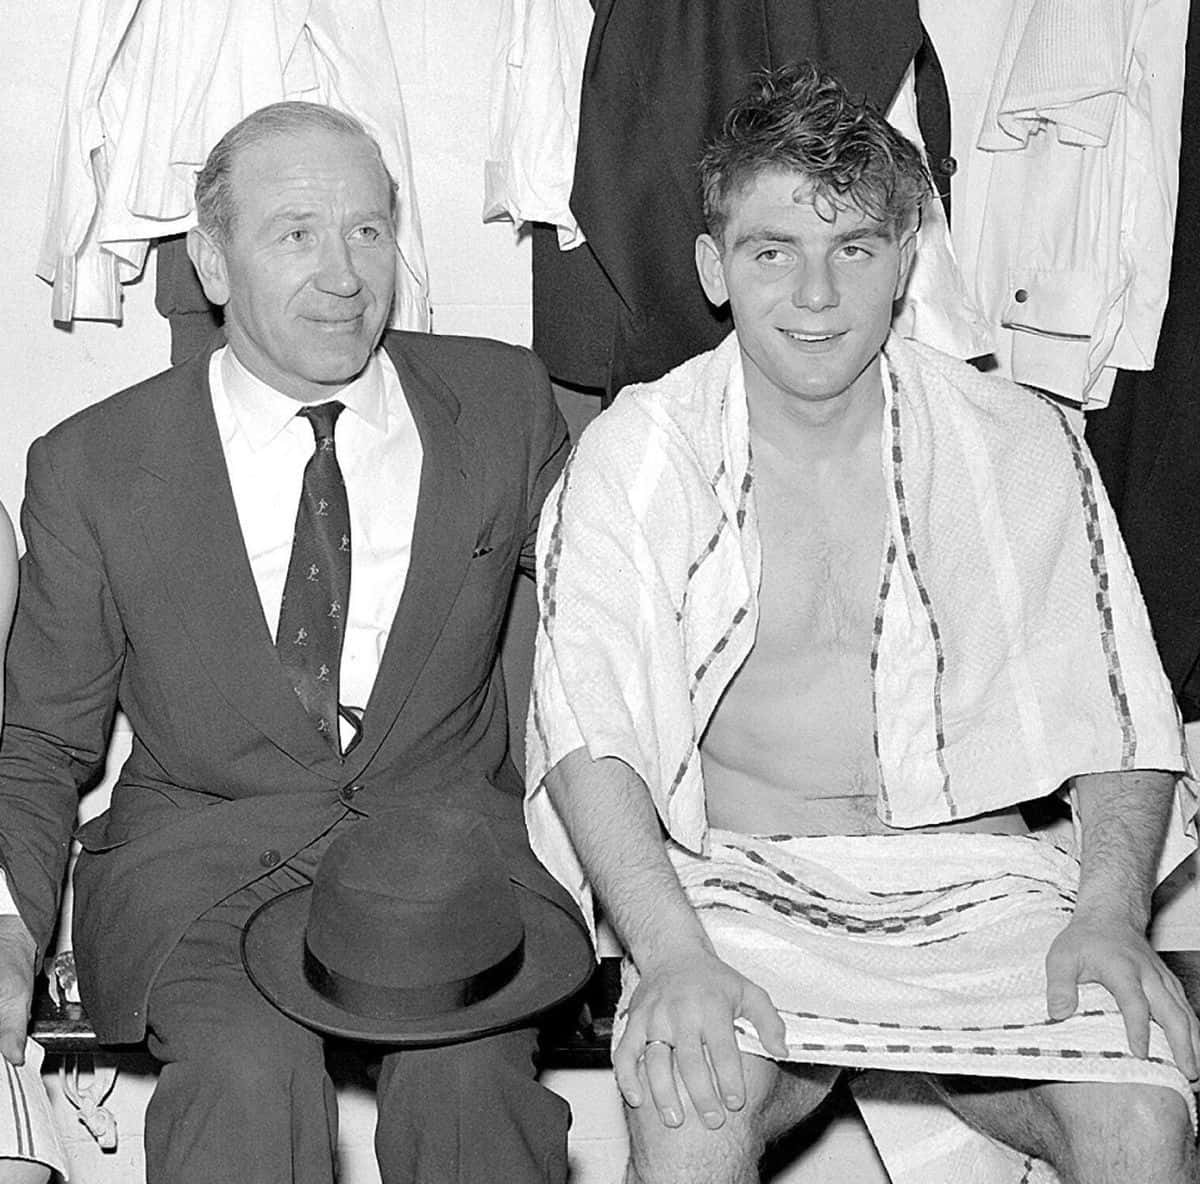 Futbolistainglés Duncan Edwards Con Matt Busby En Marzo De 1957 Fondo de pantalla